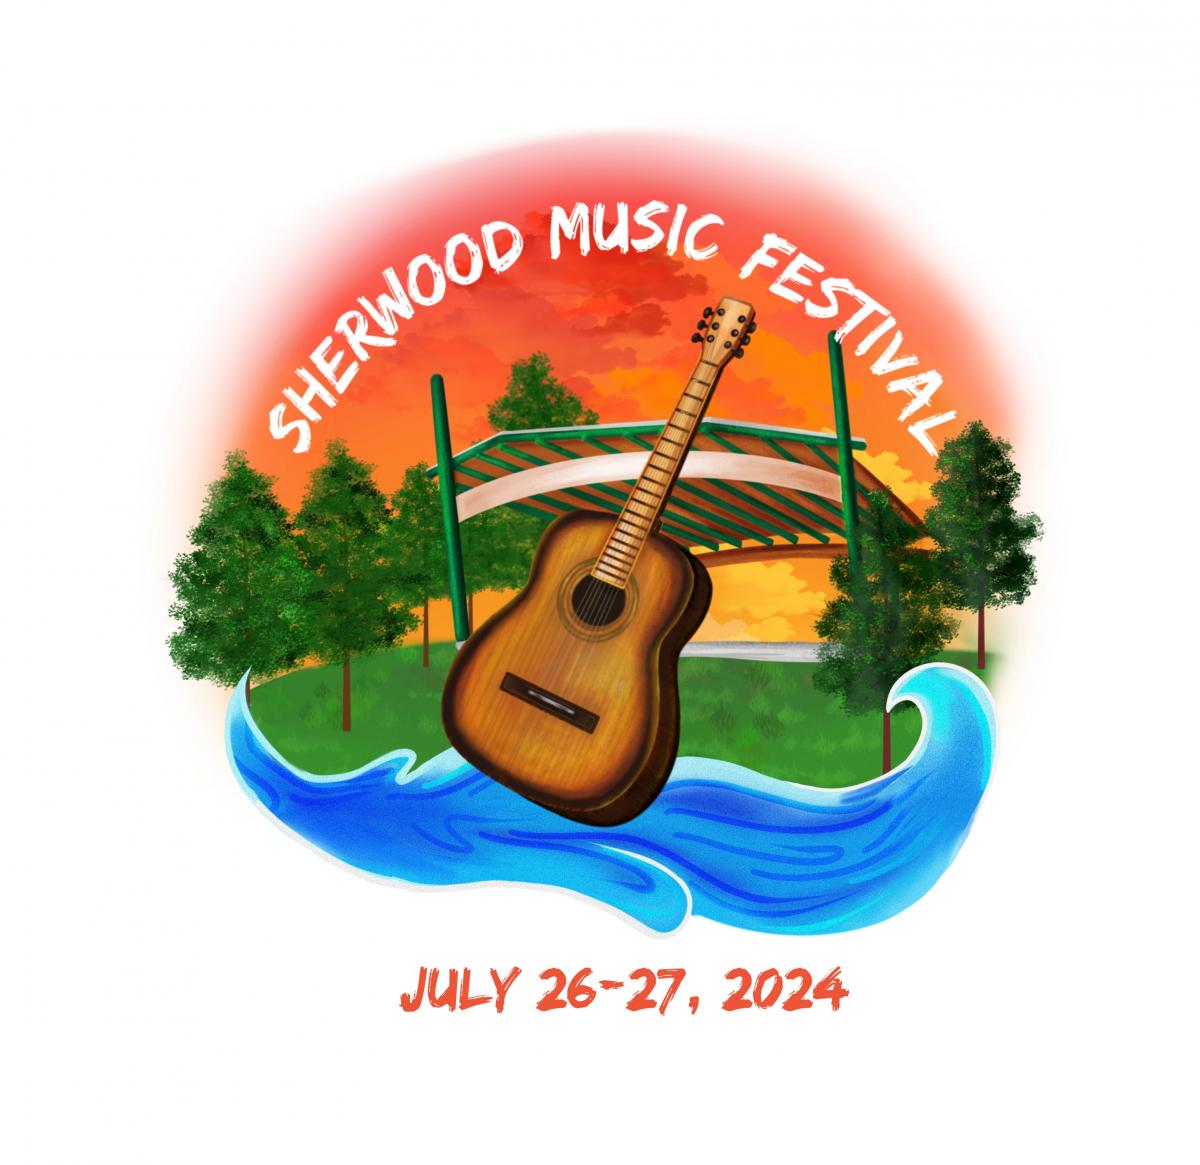 Sherwood Music Fest cover image